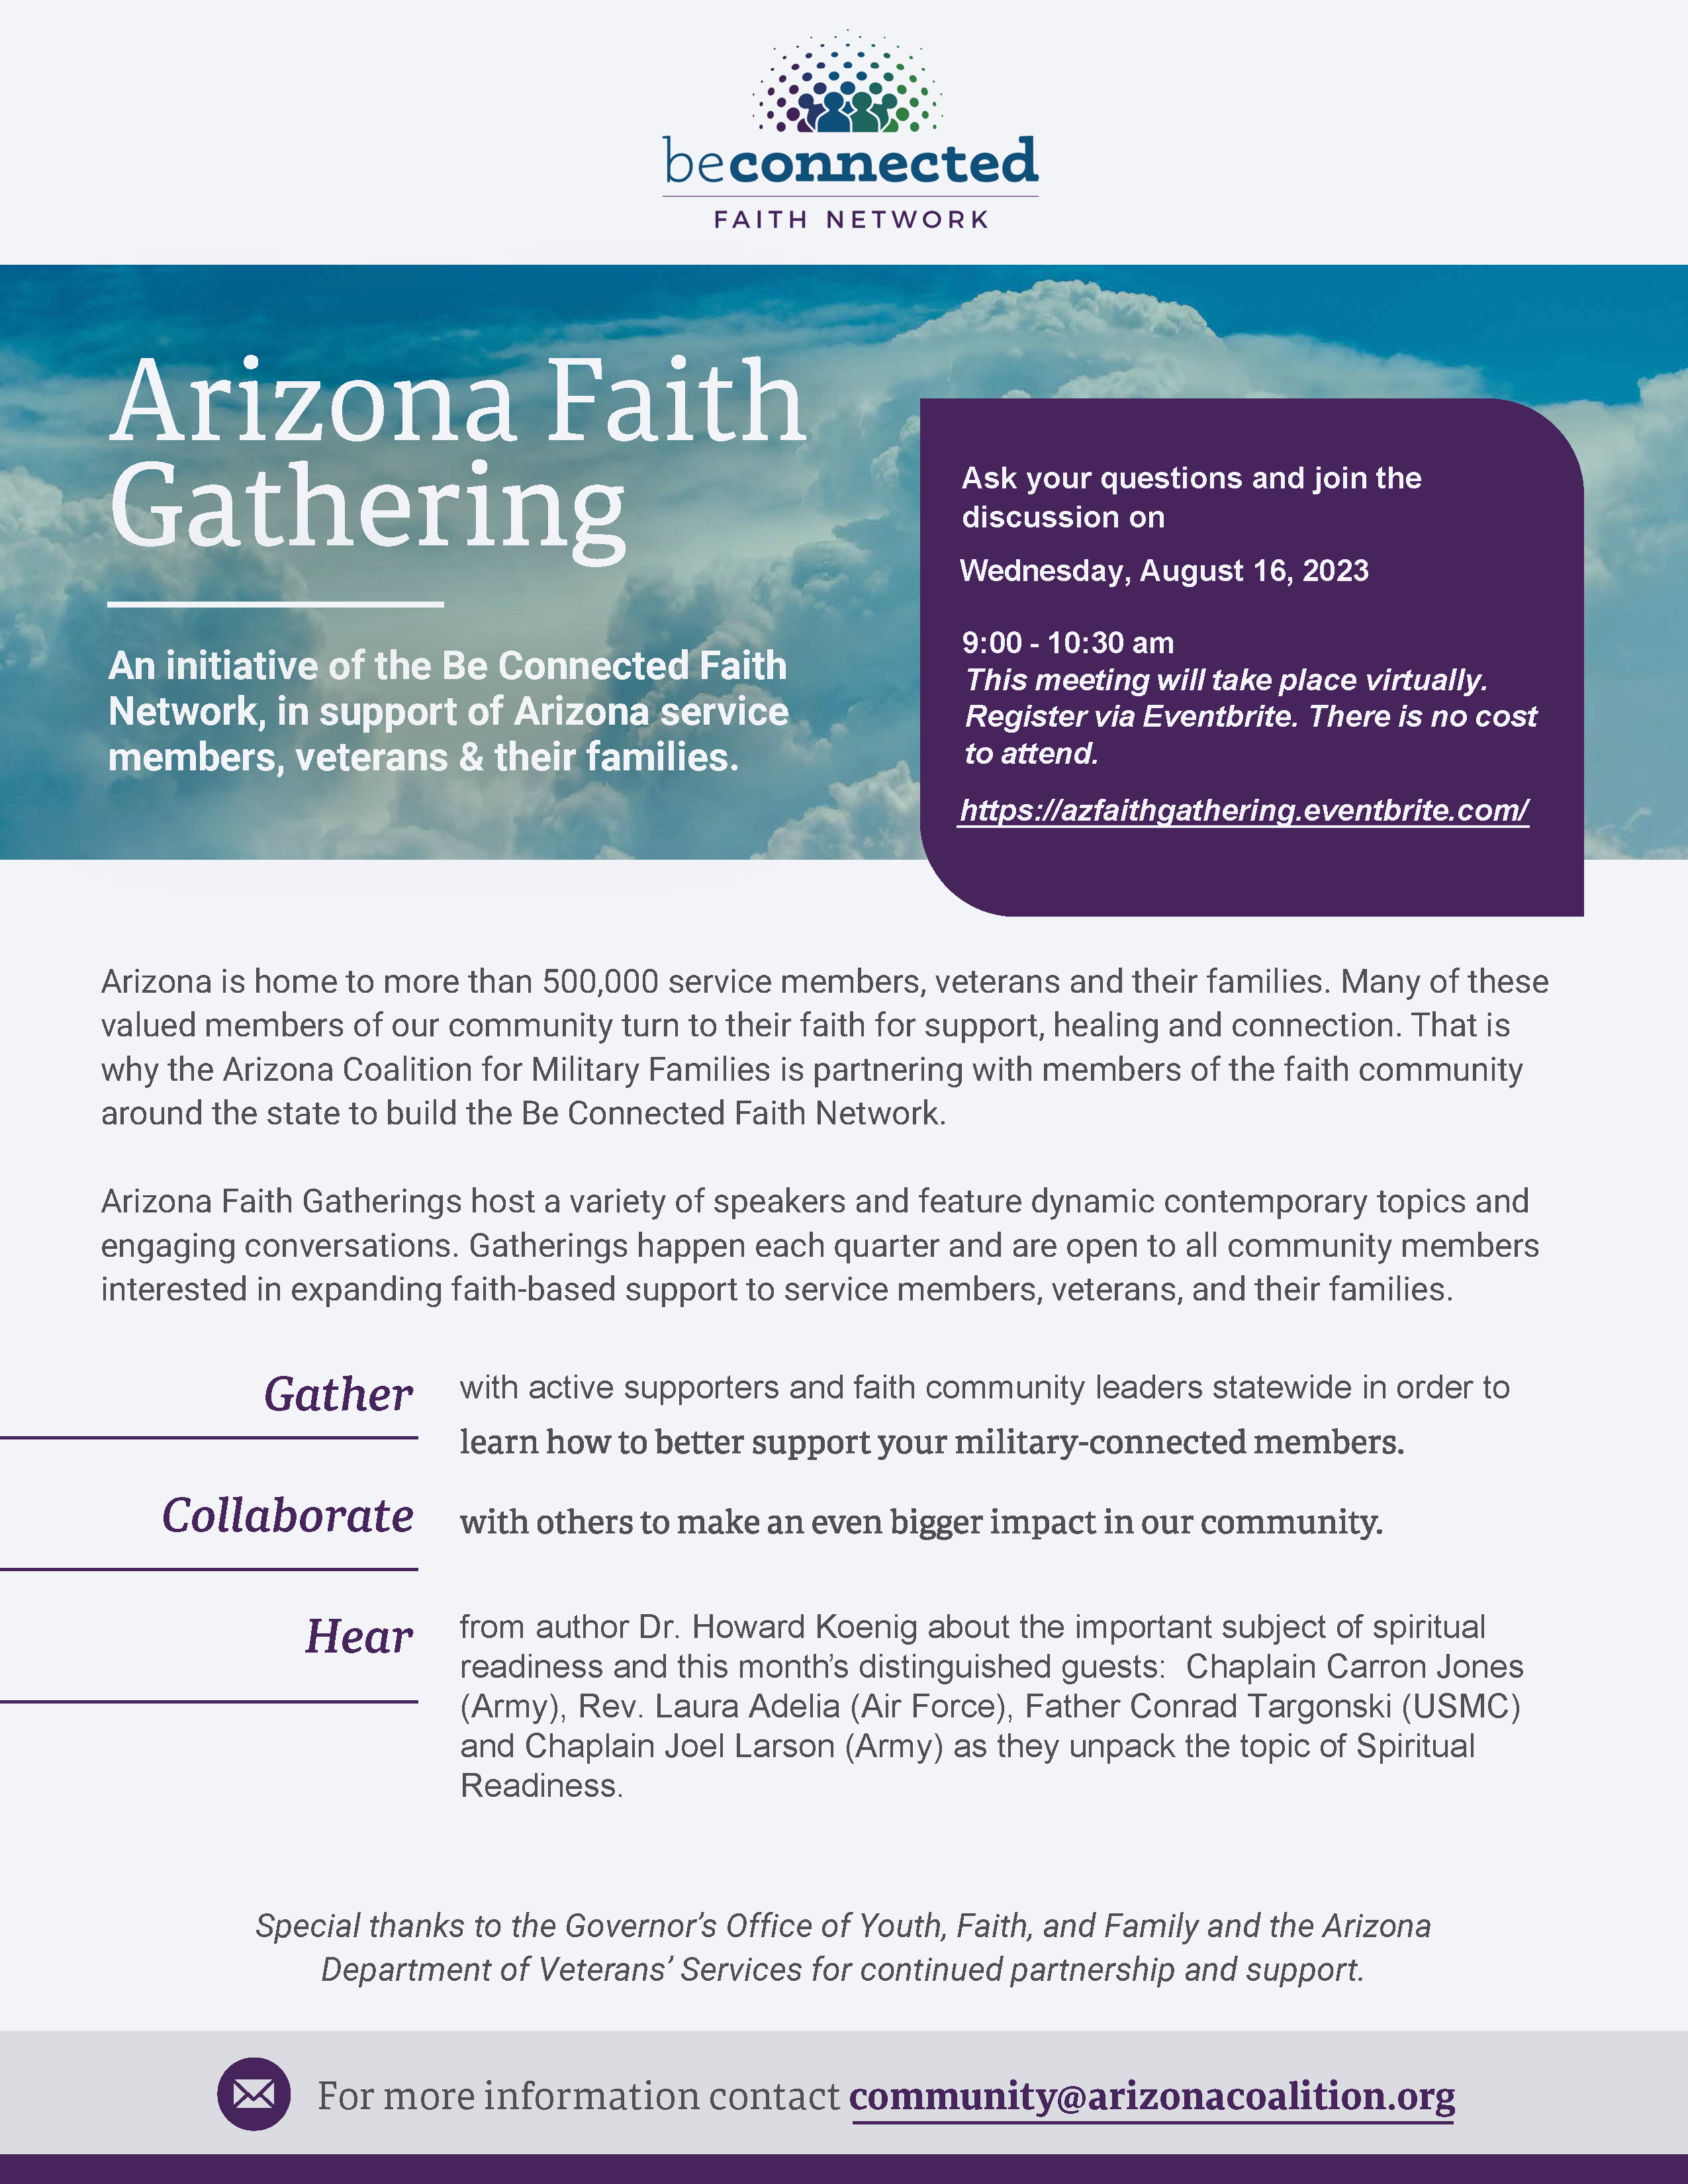 Arizona Faith Gathering flyer